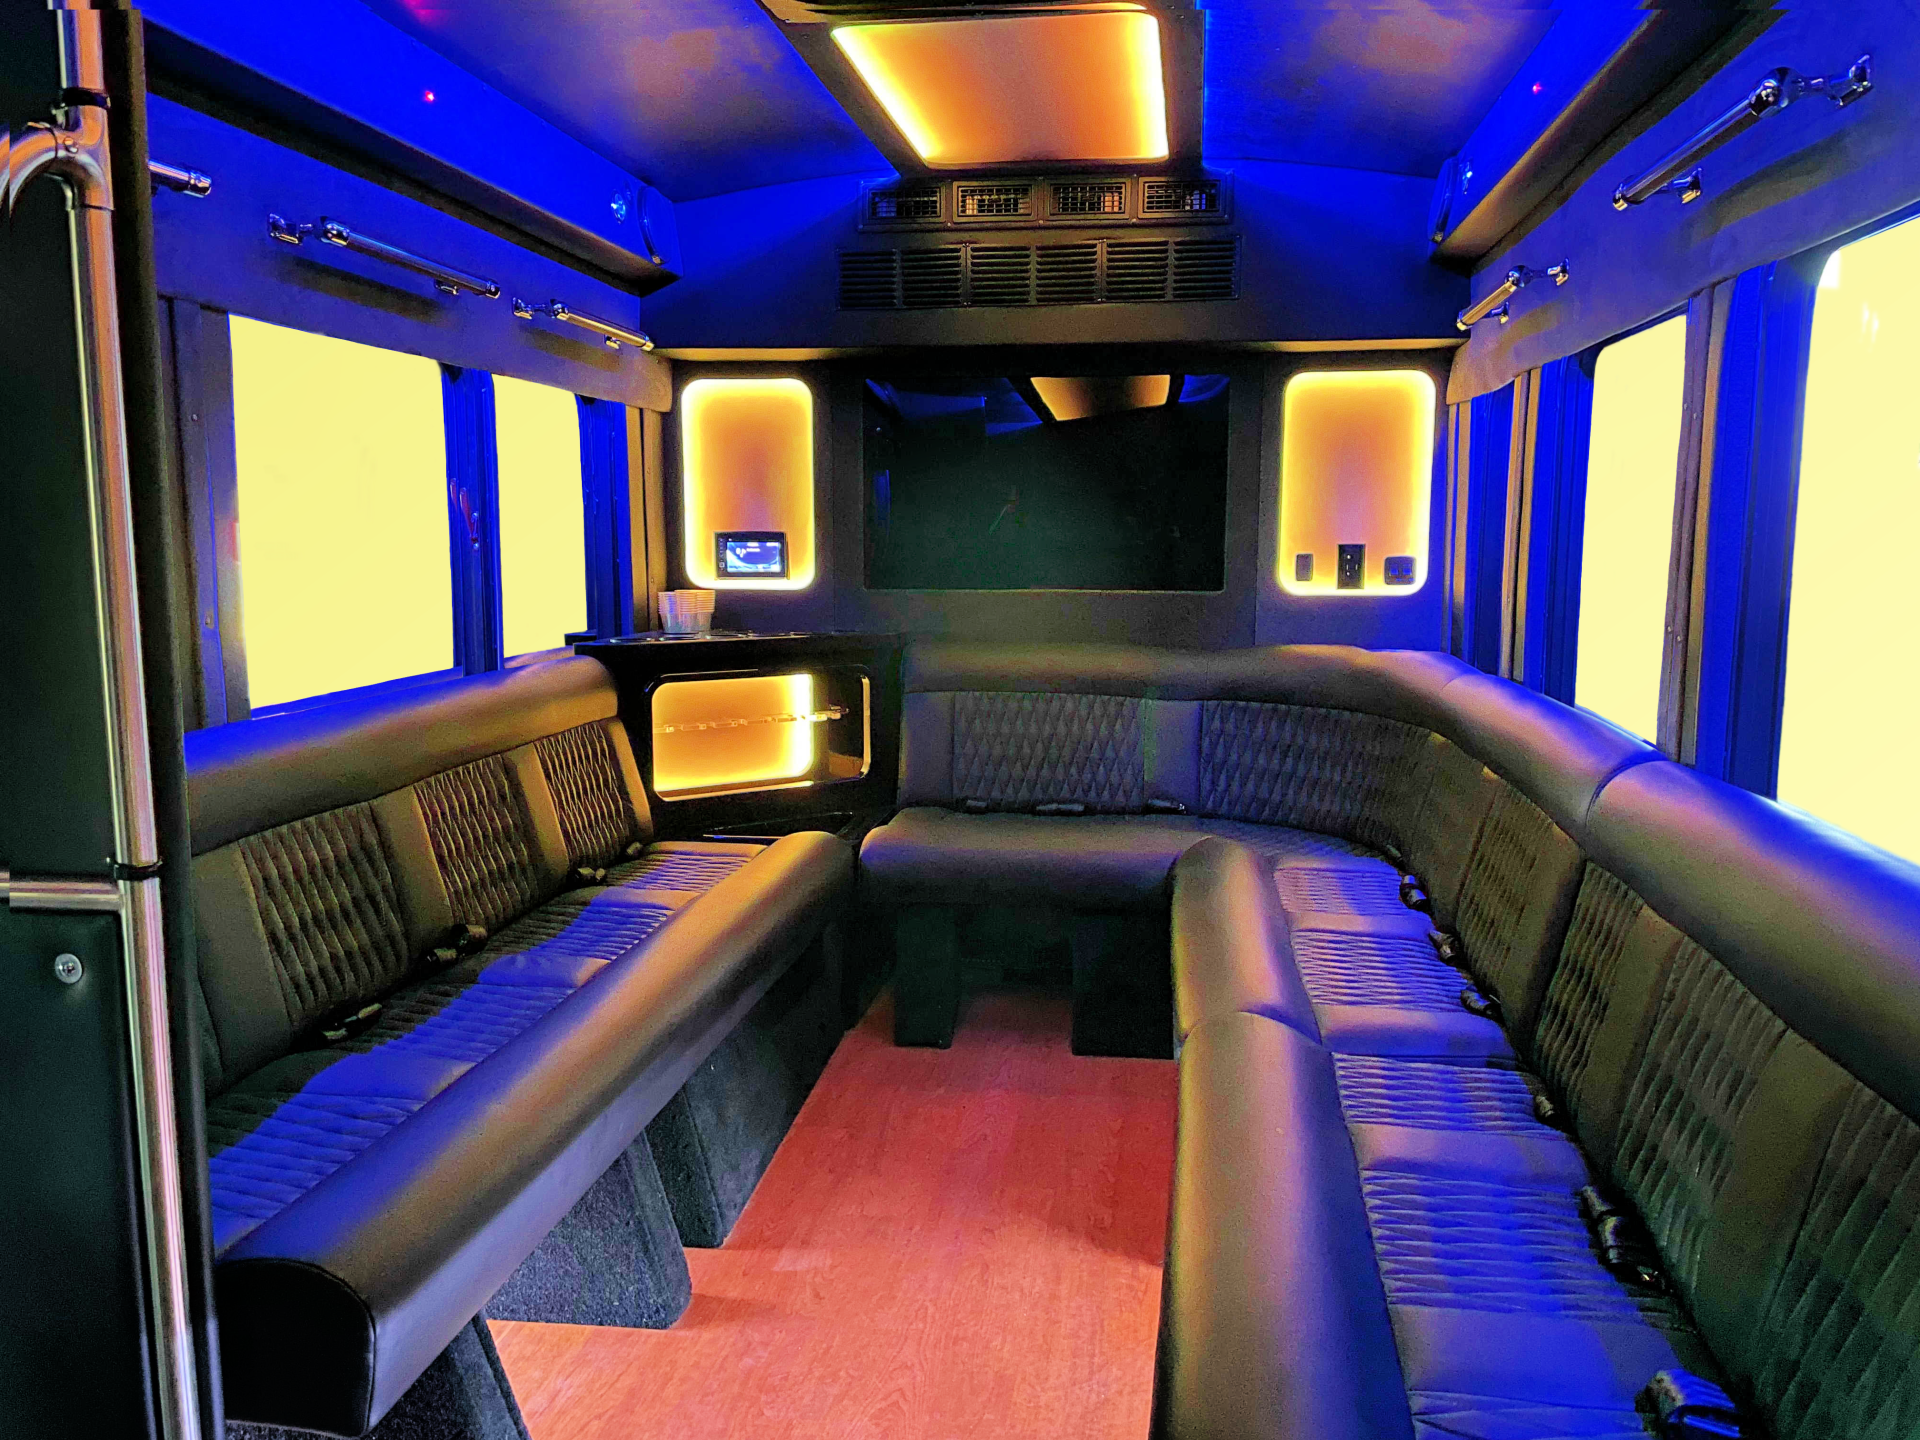 black 12 passenger Limo To Go Battisti Party bus interior LED lighting